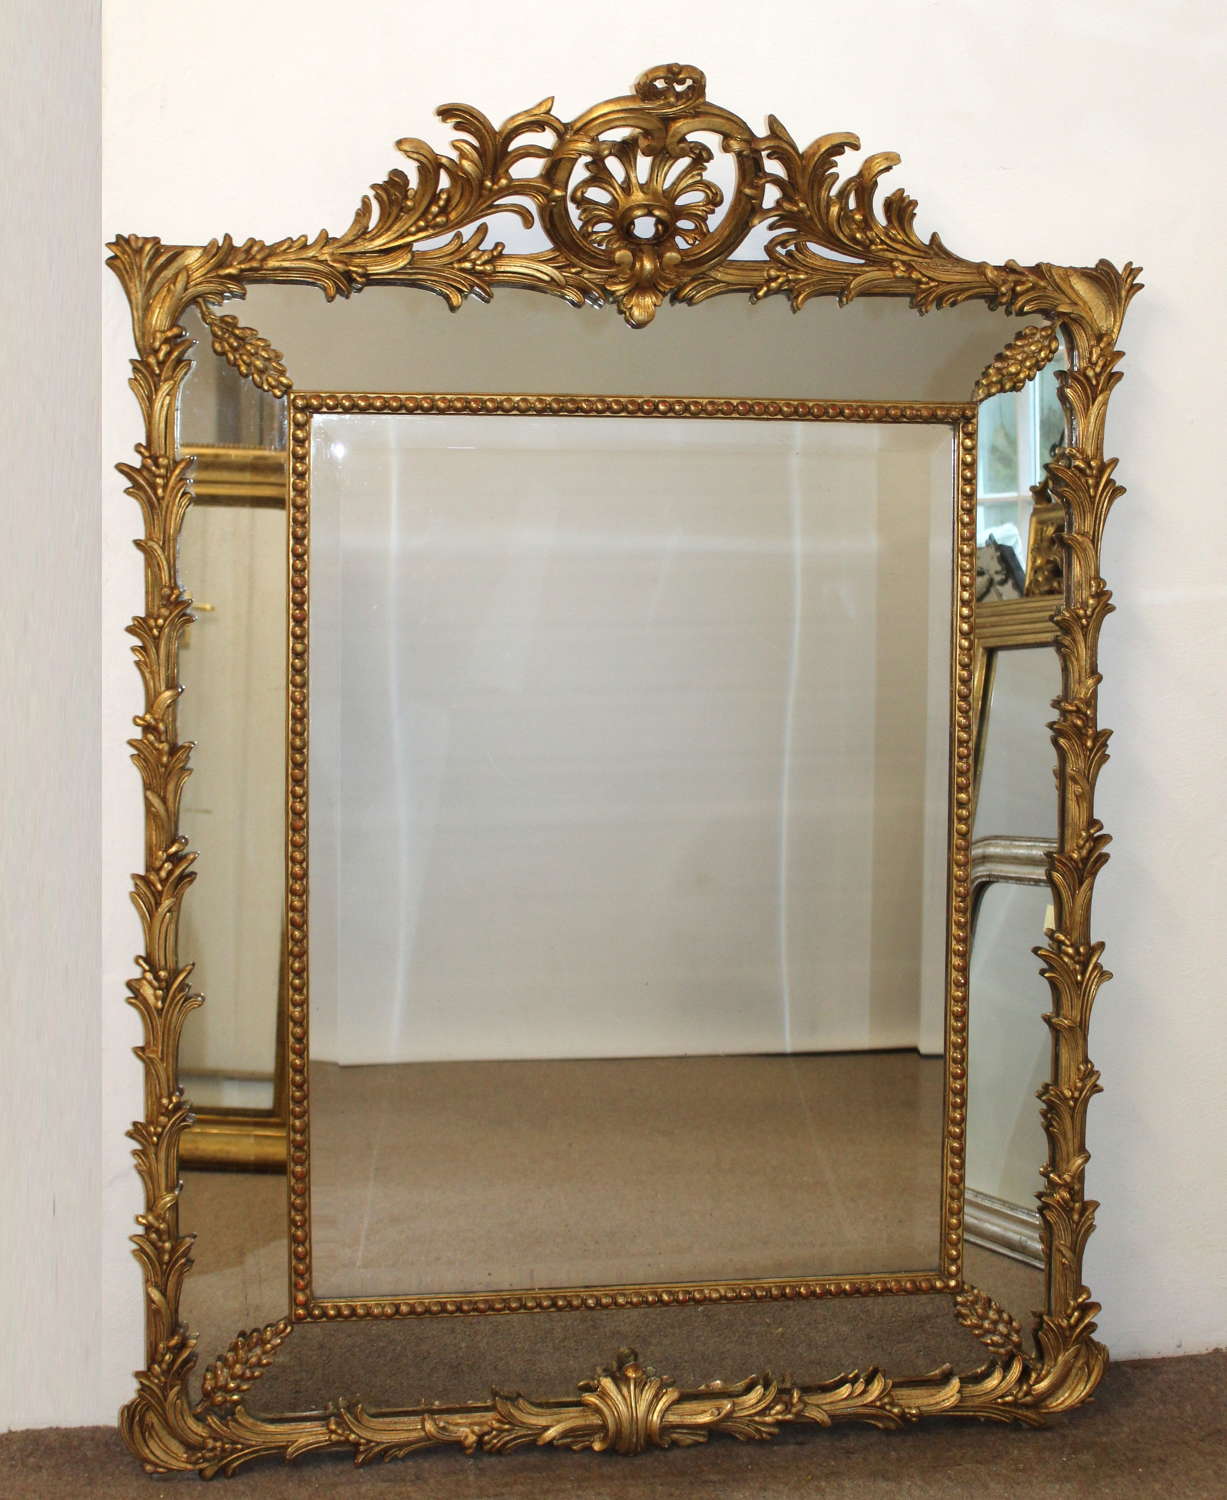 Antique French decorative gilt margin mirror with palm leaf frame